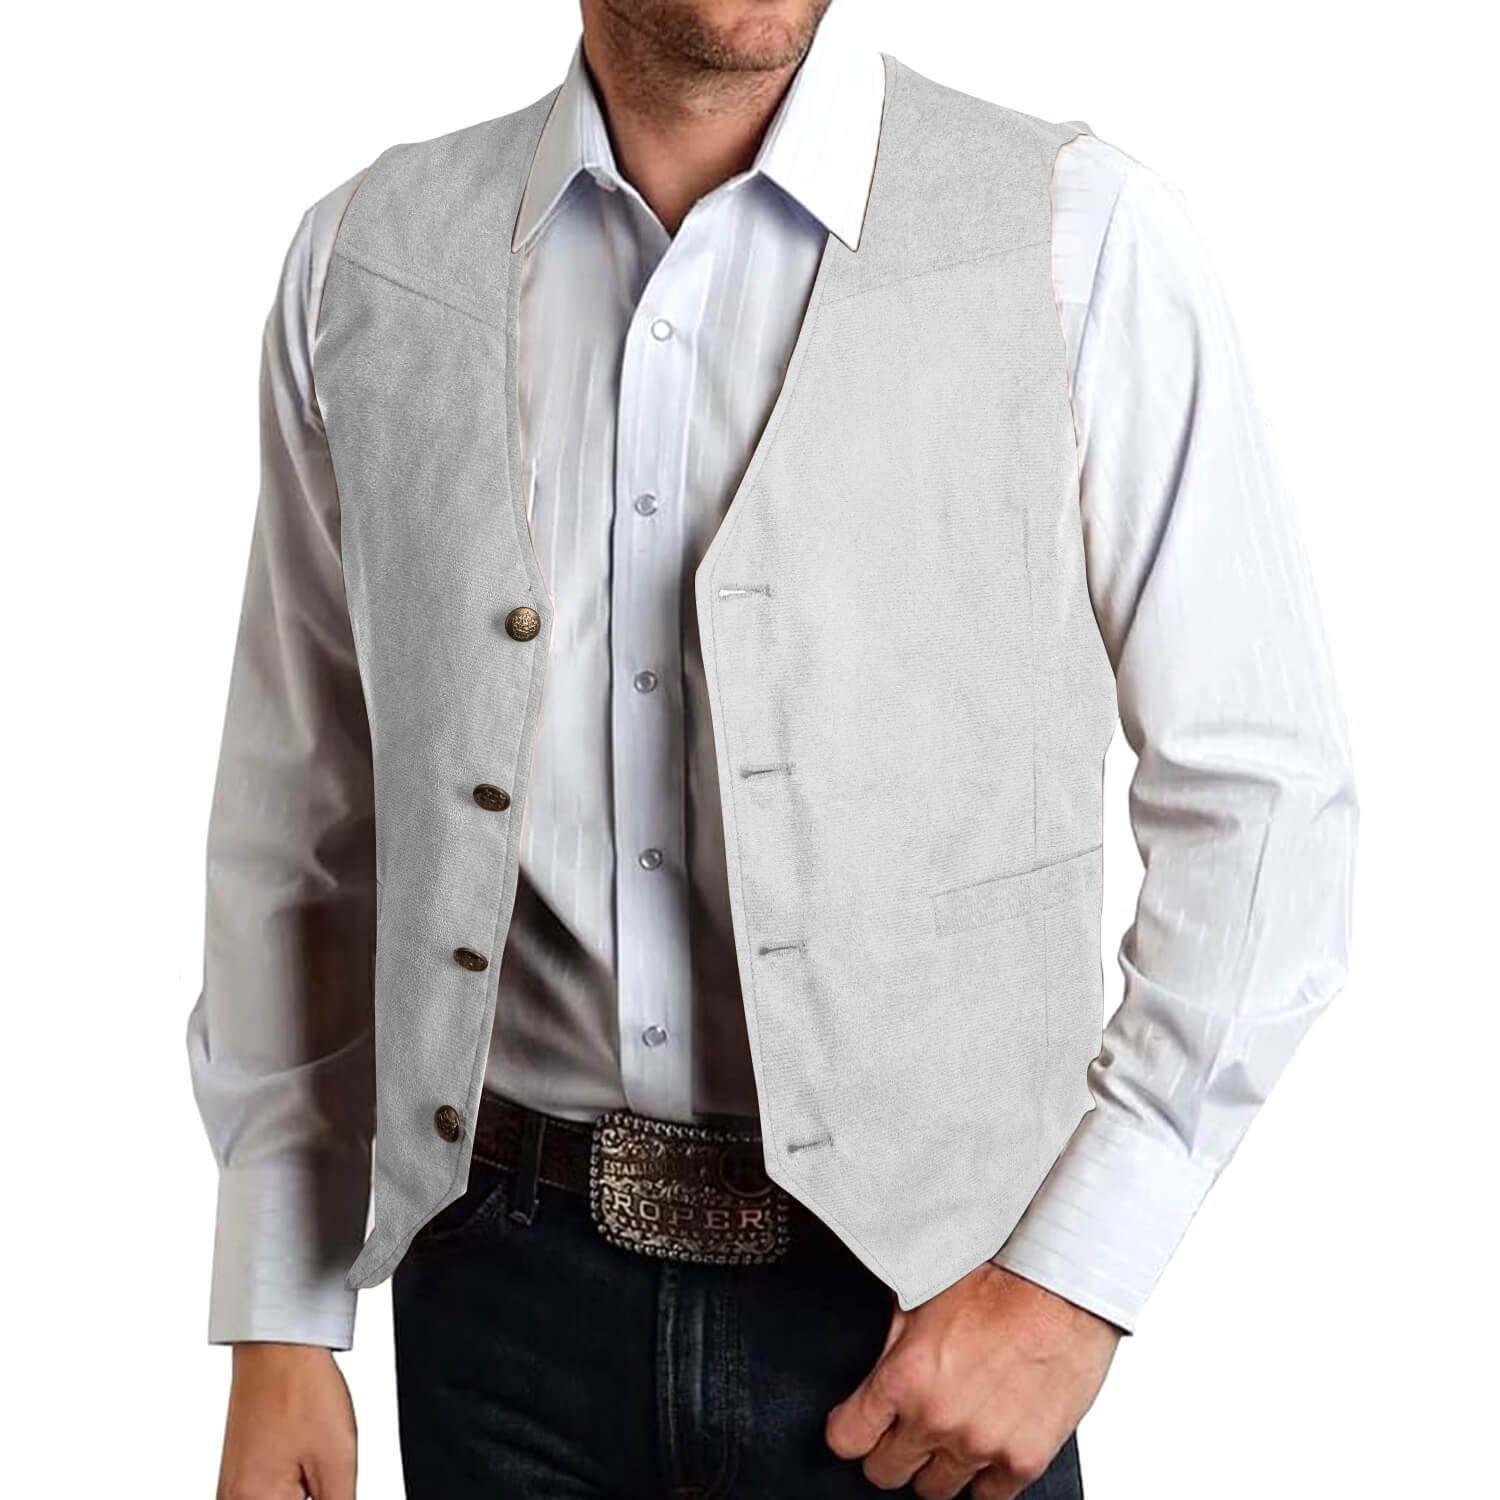 Hi-Tie Button Vest Solid Light Gray Suede Single Waistcoat for Men